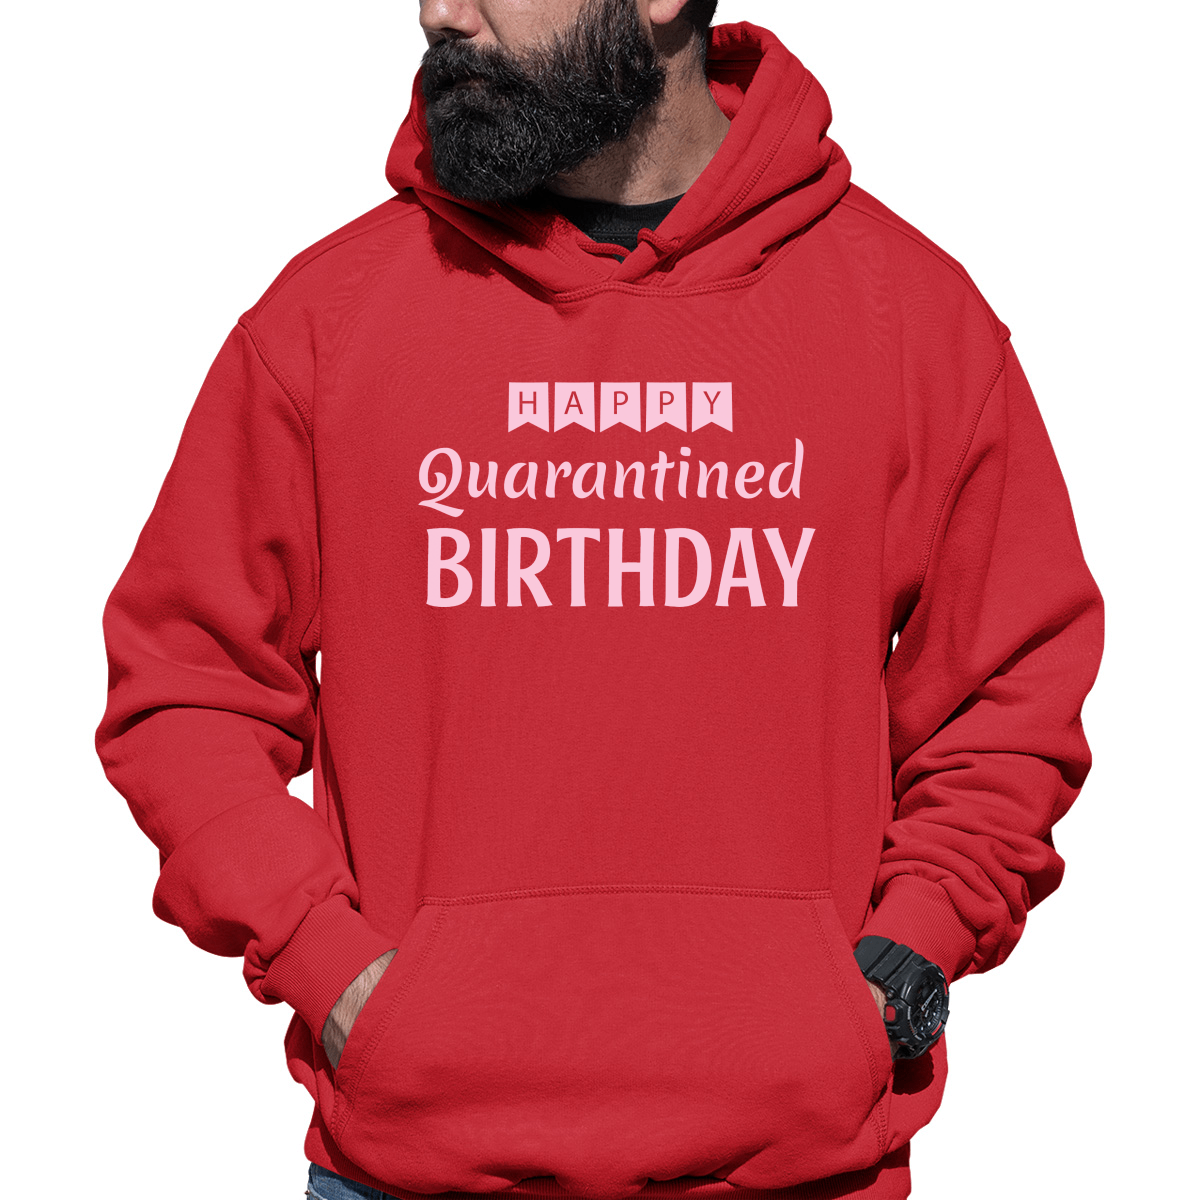 Happy Quarantined Birthday Unisex Hoodie | Red